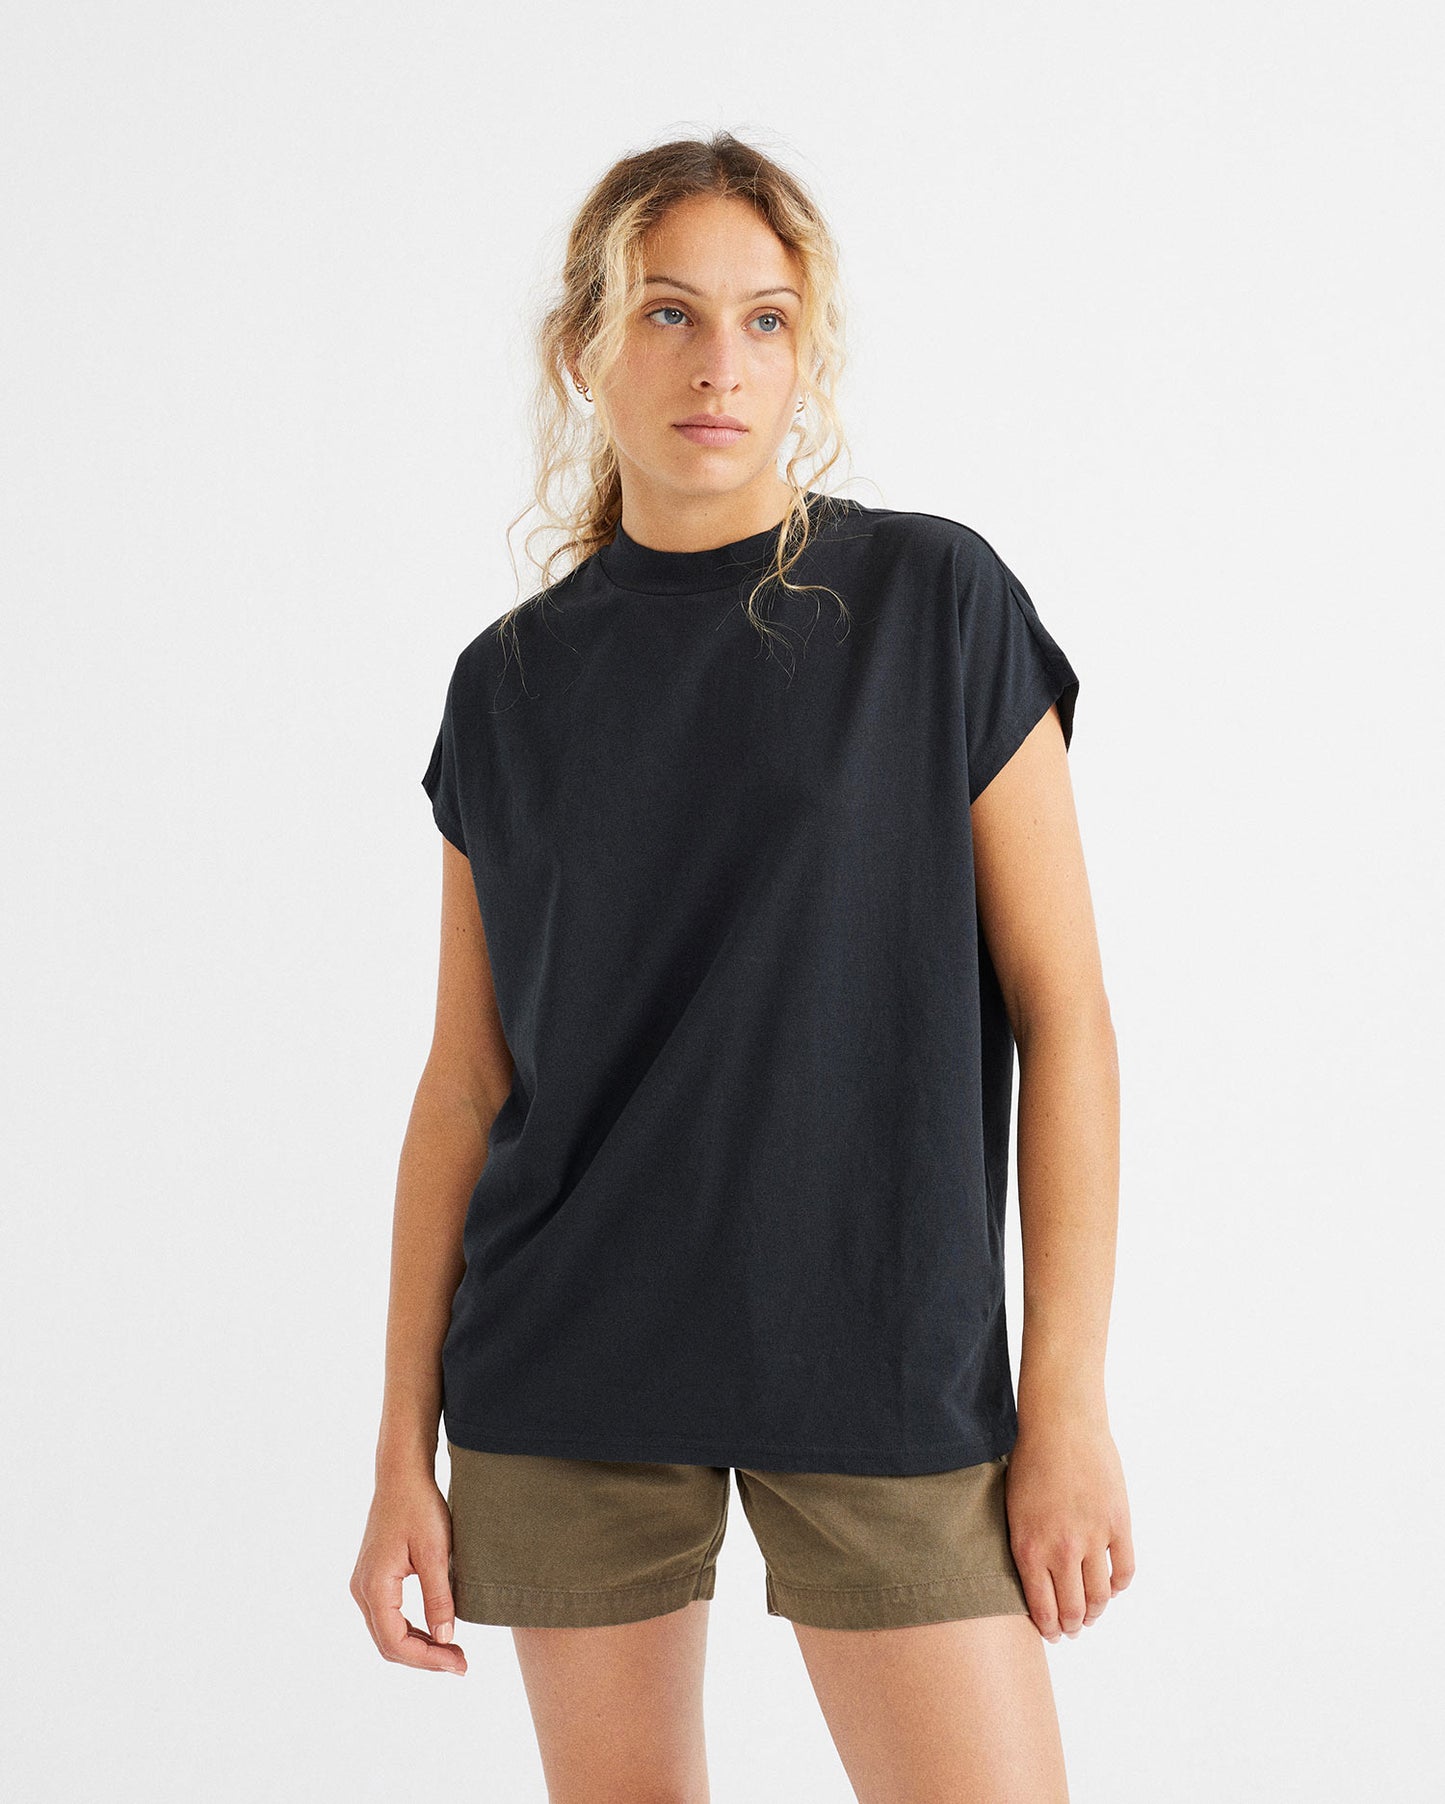 volta t-shirt, basic black, damen - thinking mu